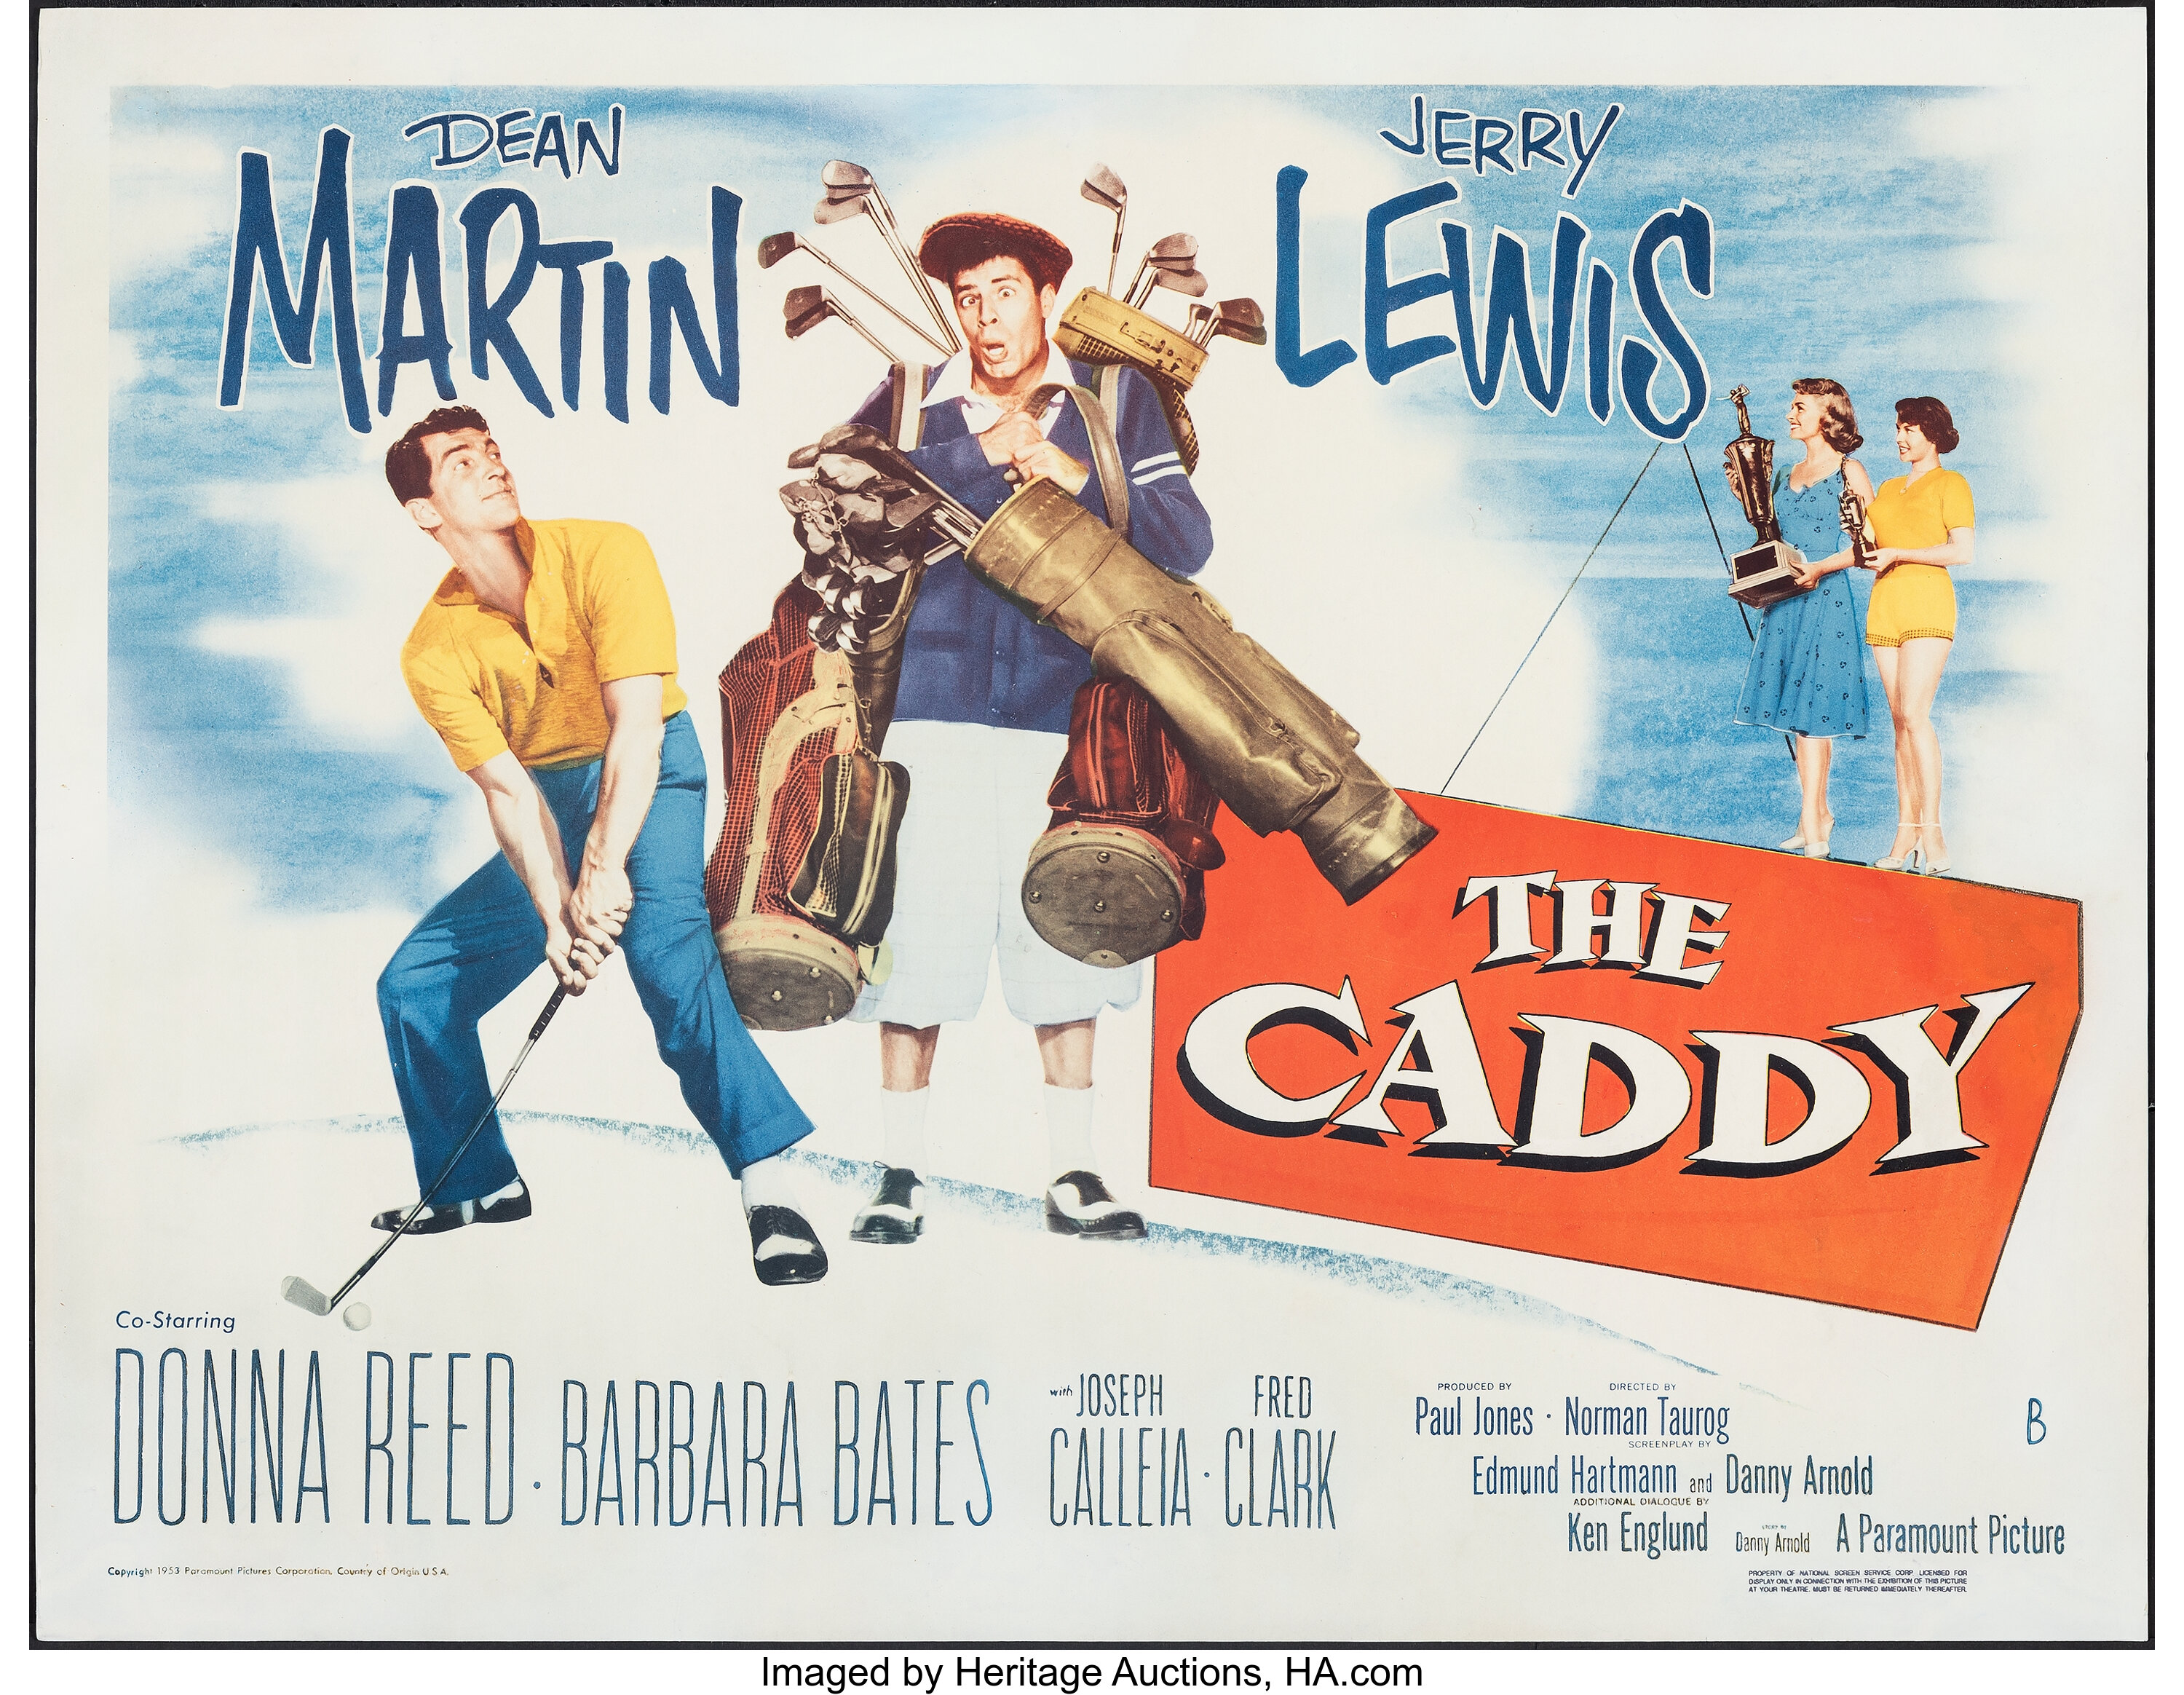 The Caddy (1953) - IMDb